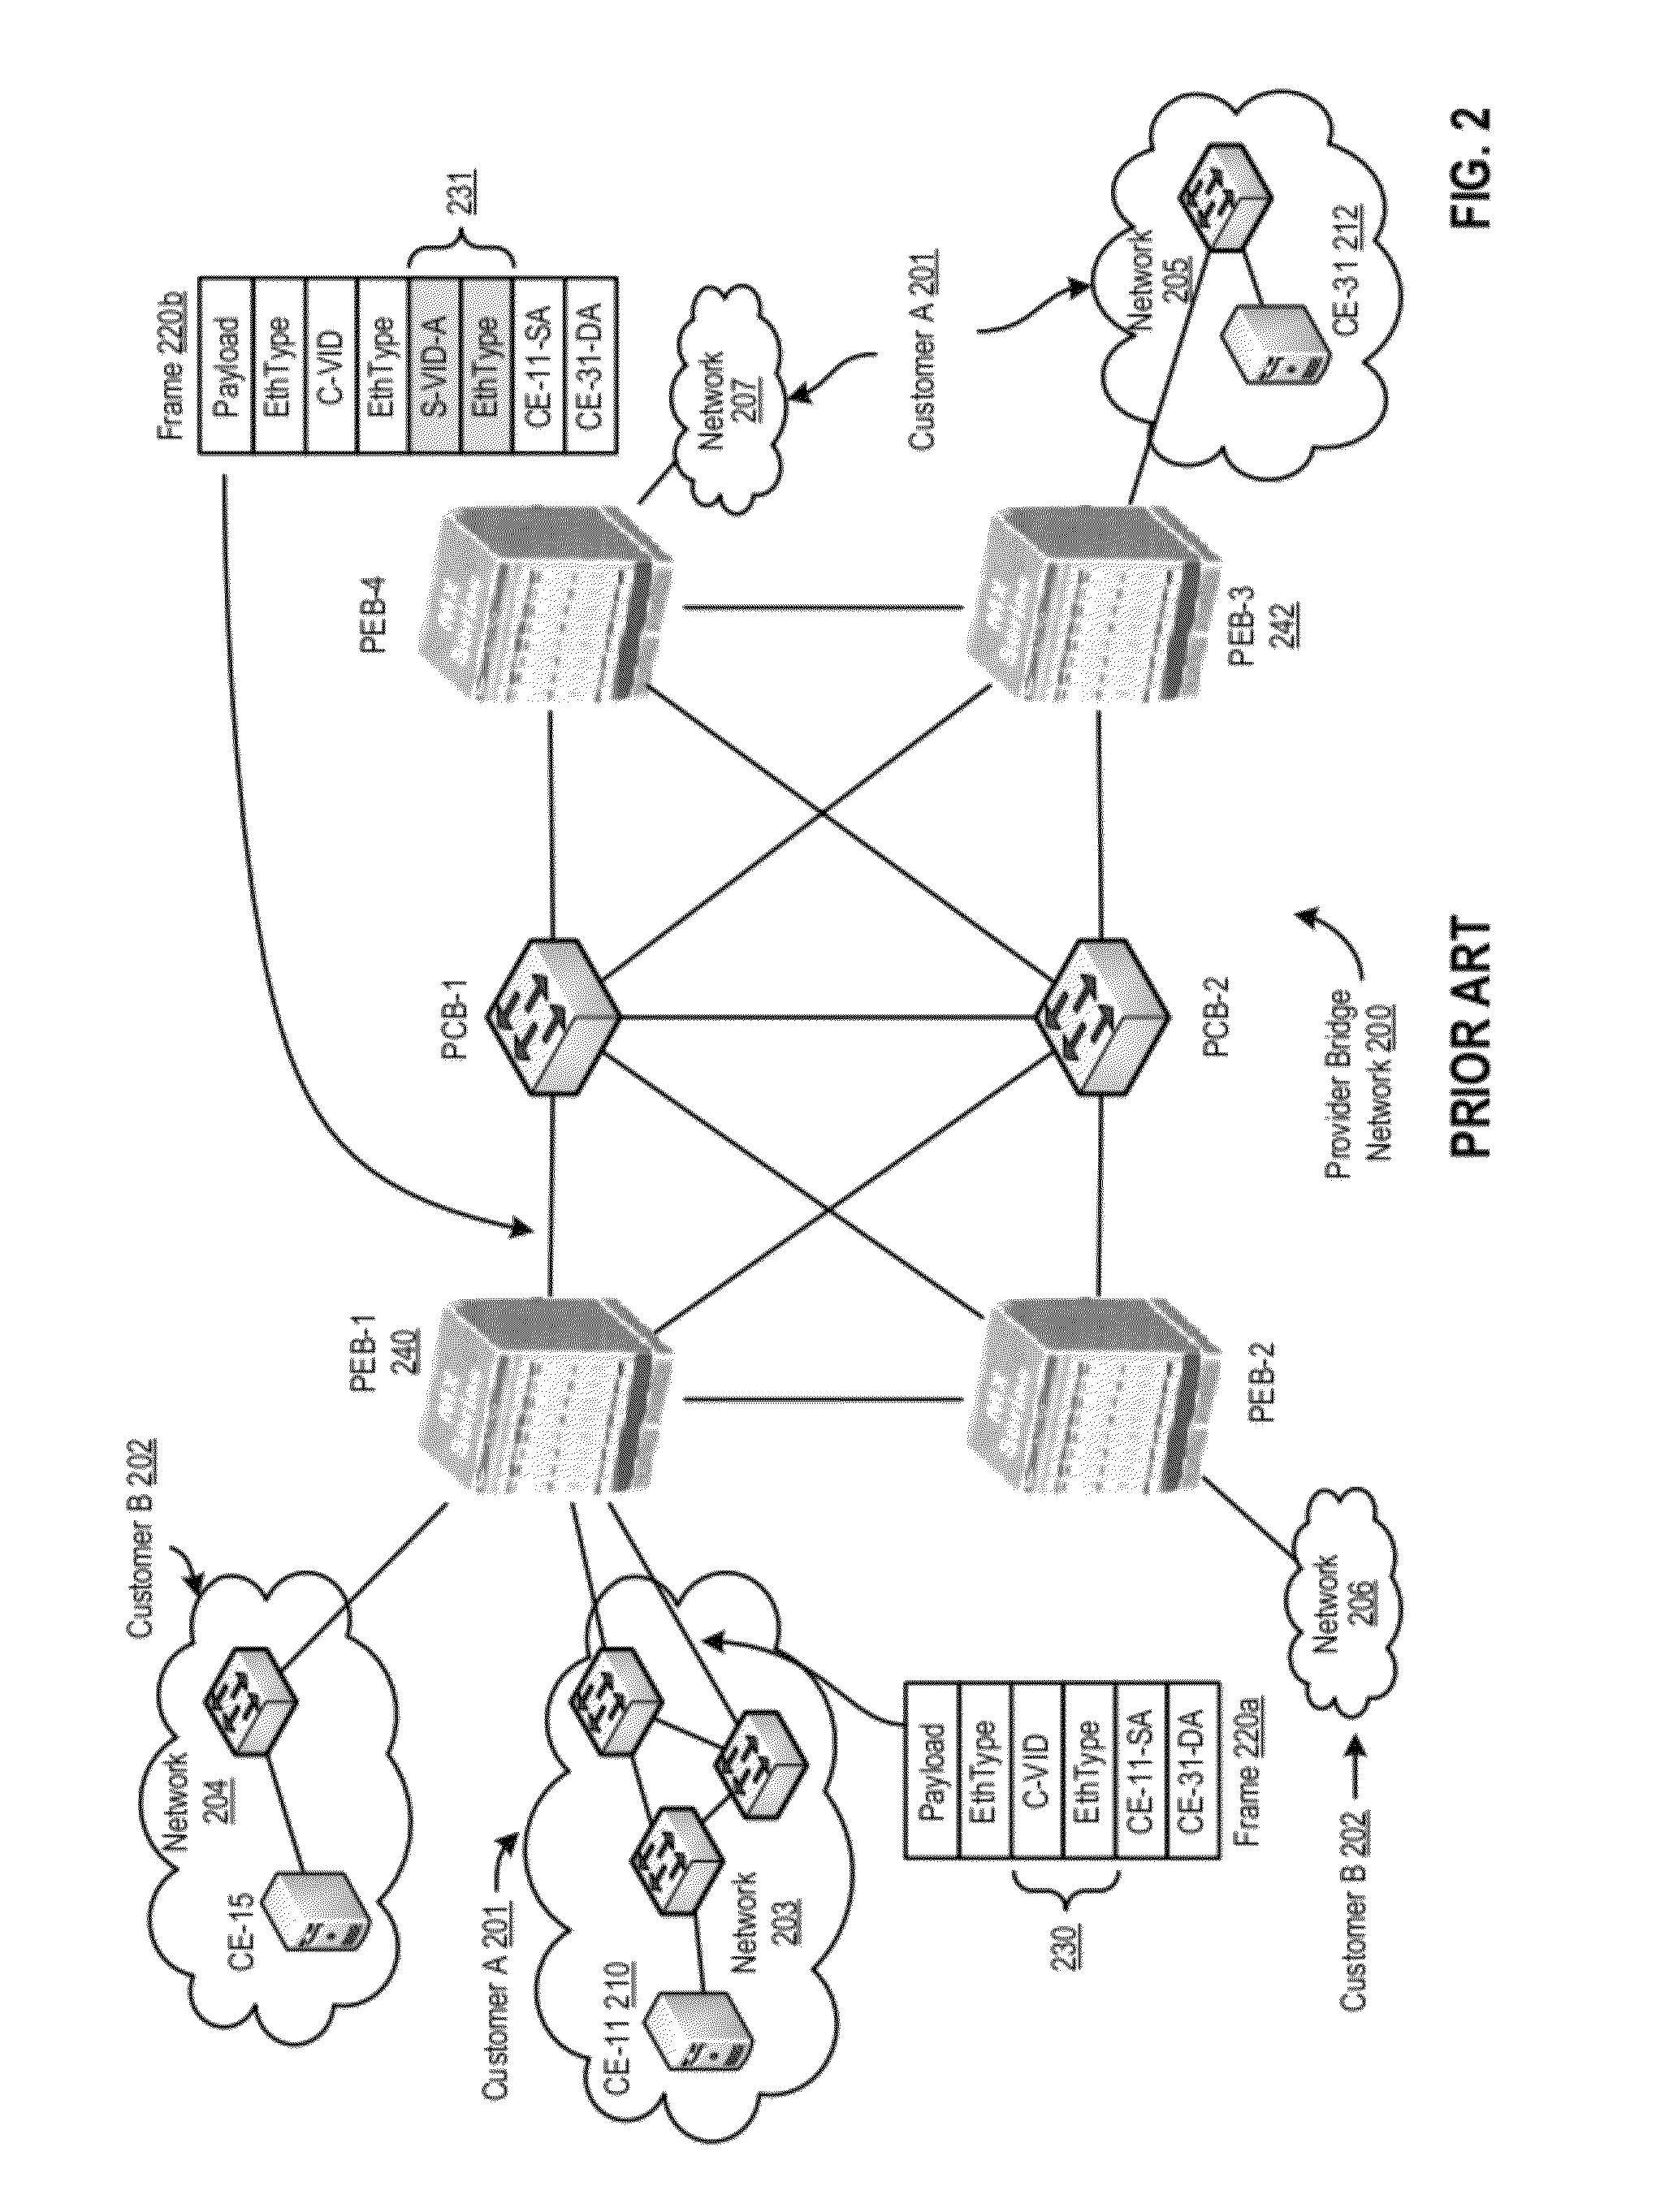 Forwarding frames in a computer network using shortest path bridging